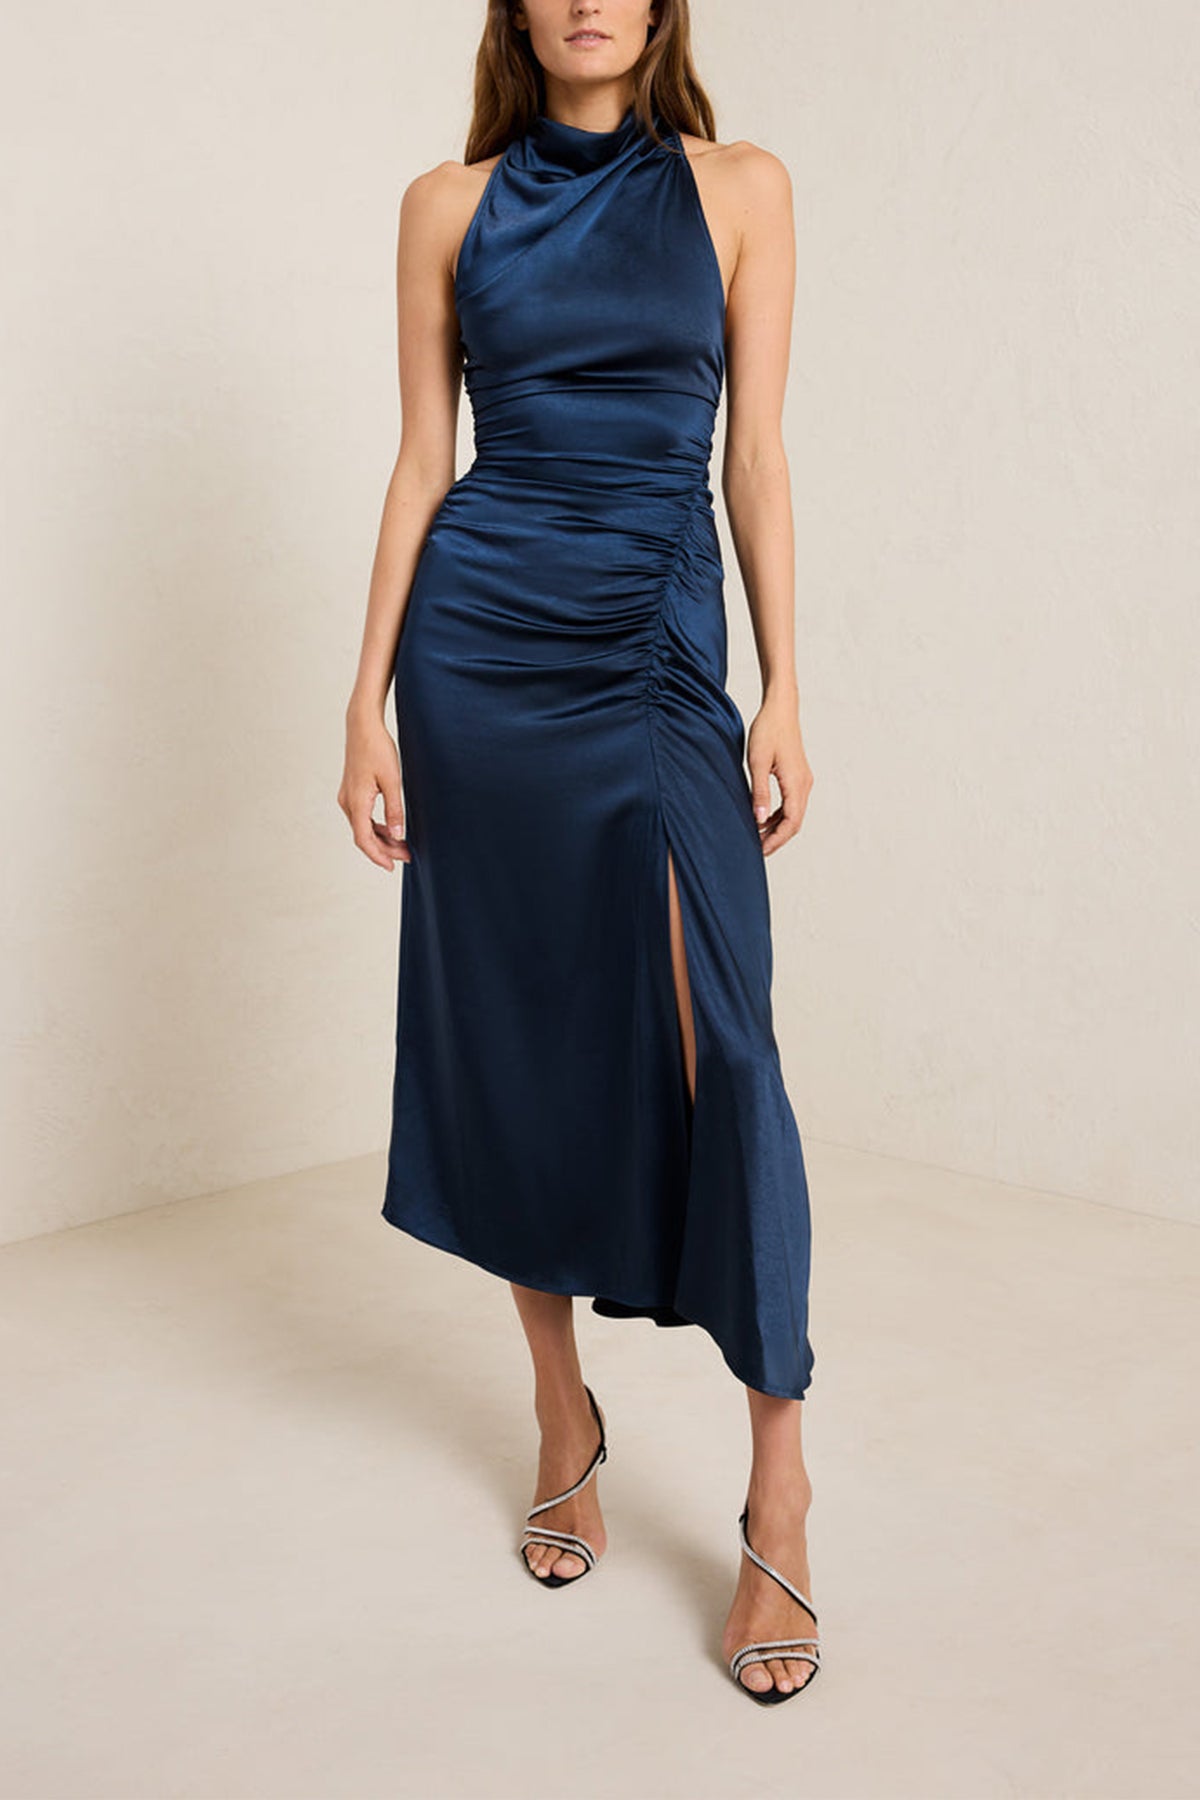 Inez Dress in Dark Sapphire - shop-olivia.com